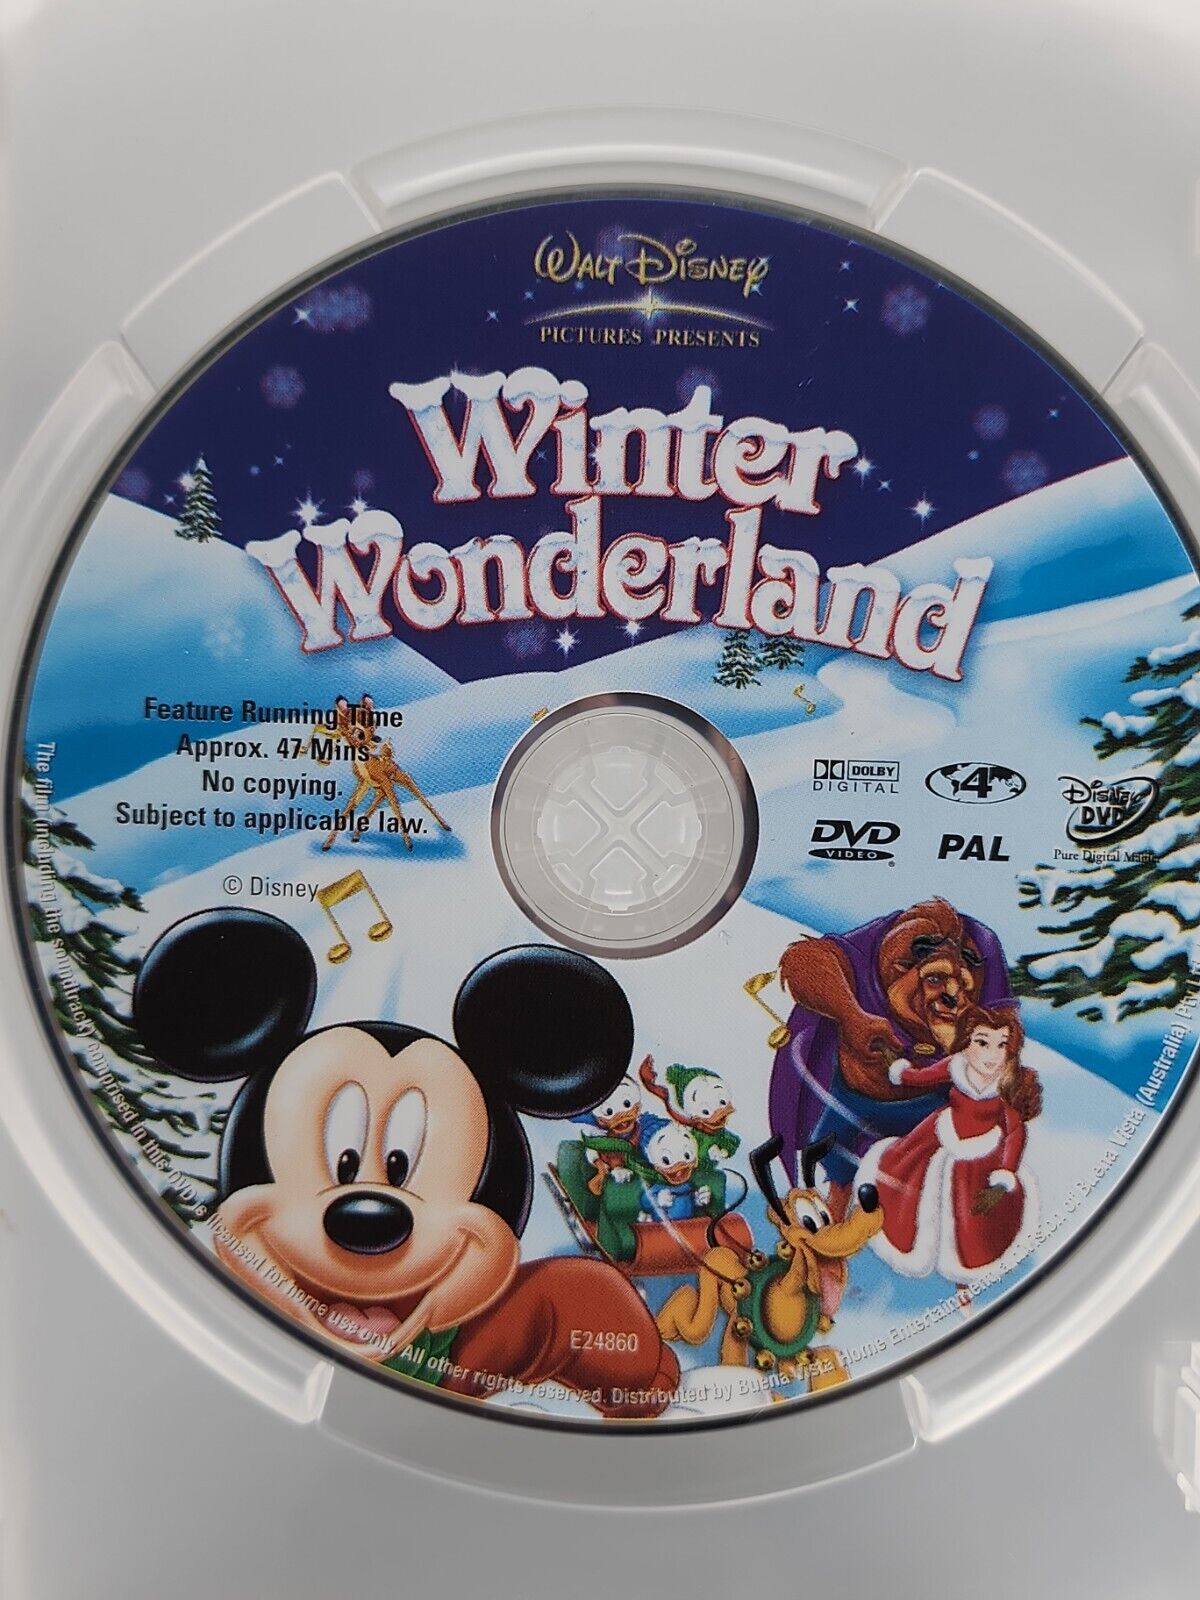 Winter Wonderland (DVD, 2003) for sale online | eBay